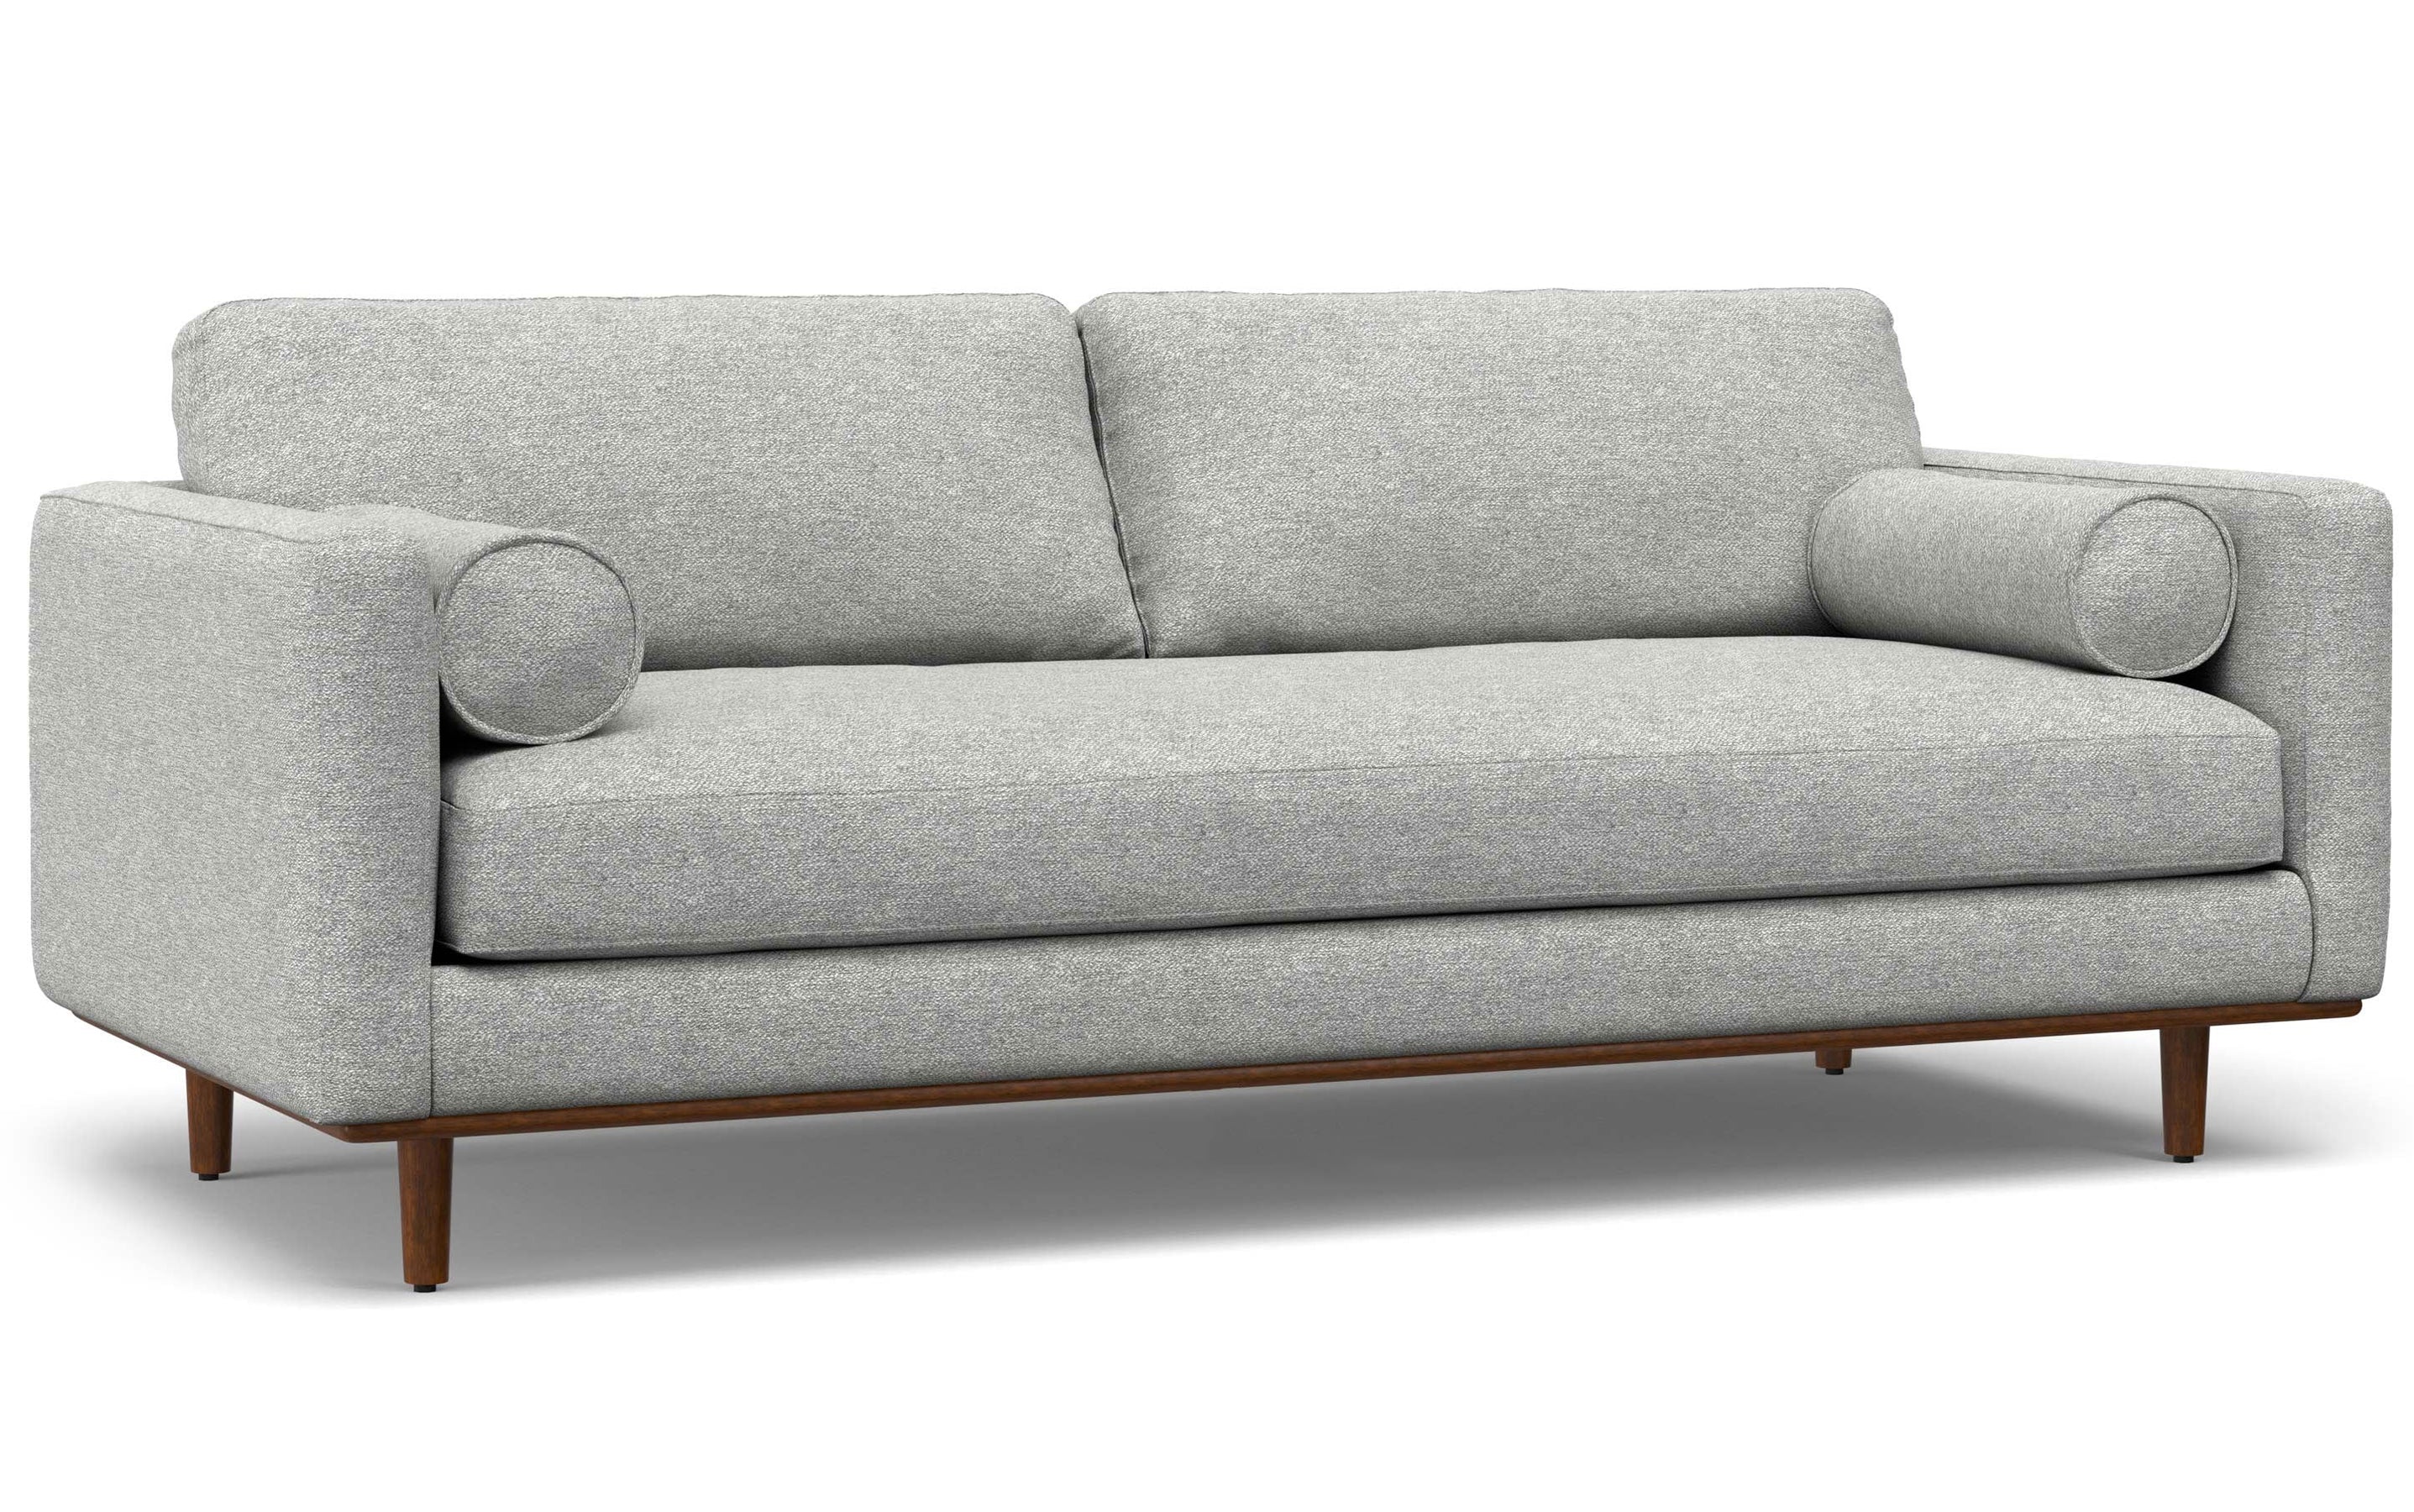 Mist Grey Woven-Blend Fabric | Morrison 88.5 inch Mid Century Sofa